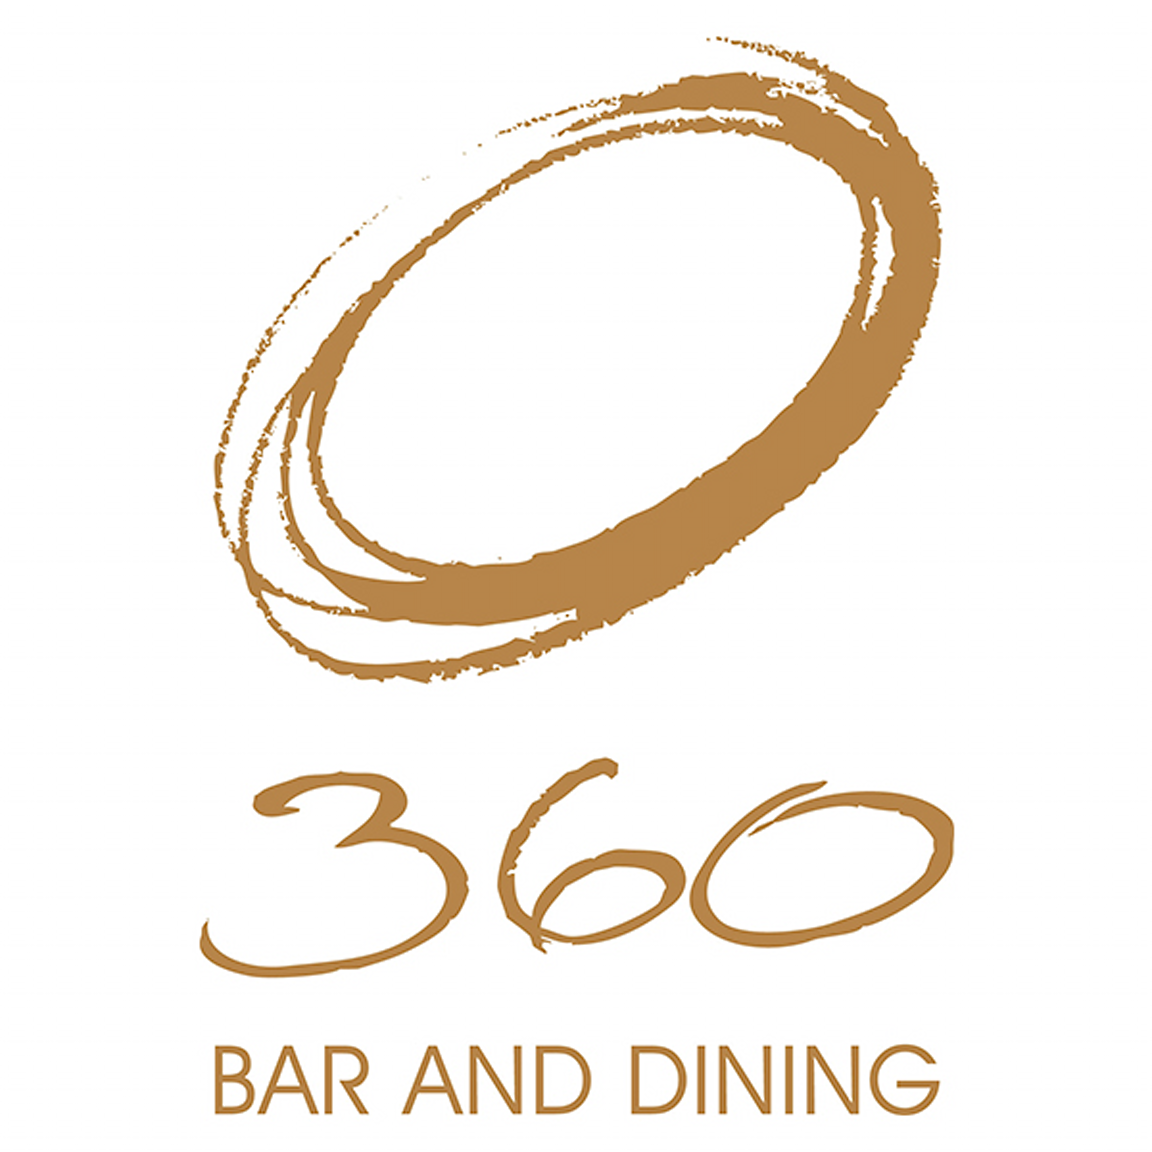 360-bar-and-dining-logo